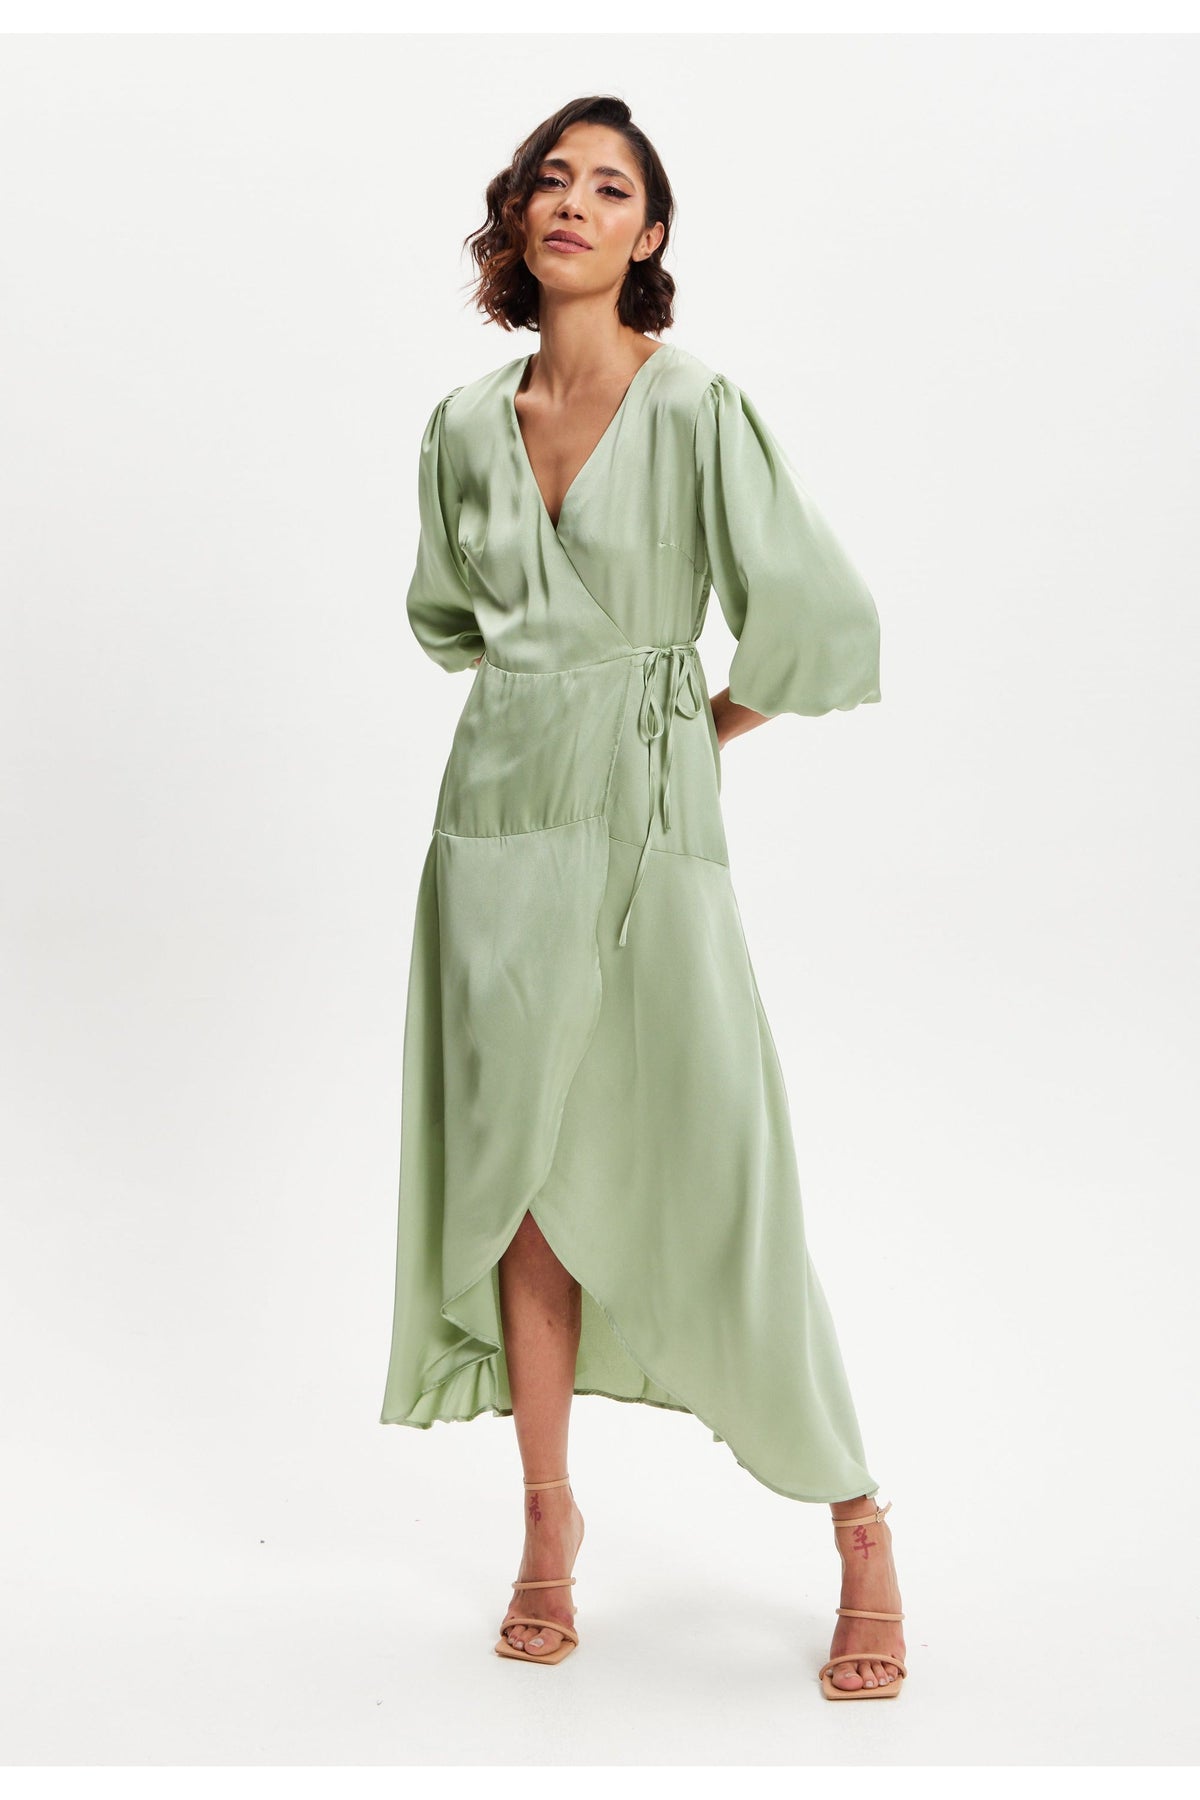 Sage Green Midi Wrap Dress With Short Puff Sleeves LIQ20-128Green